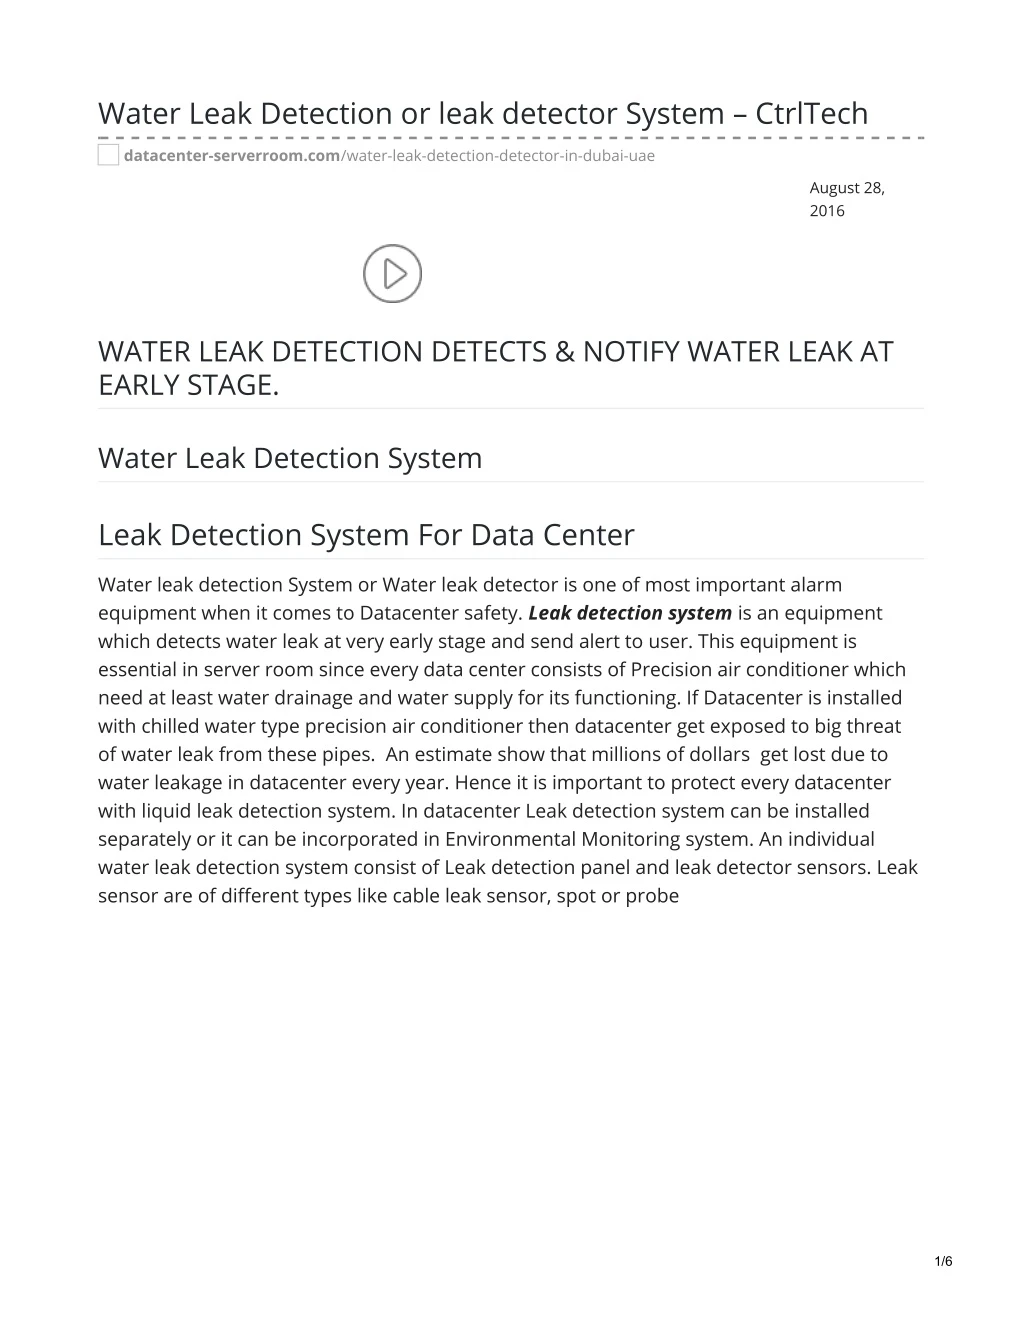 water leak detection or leak detector system